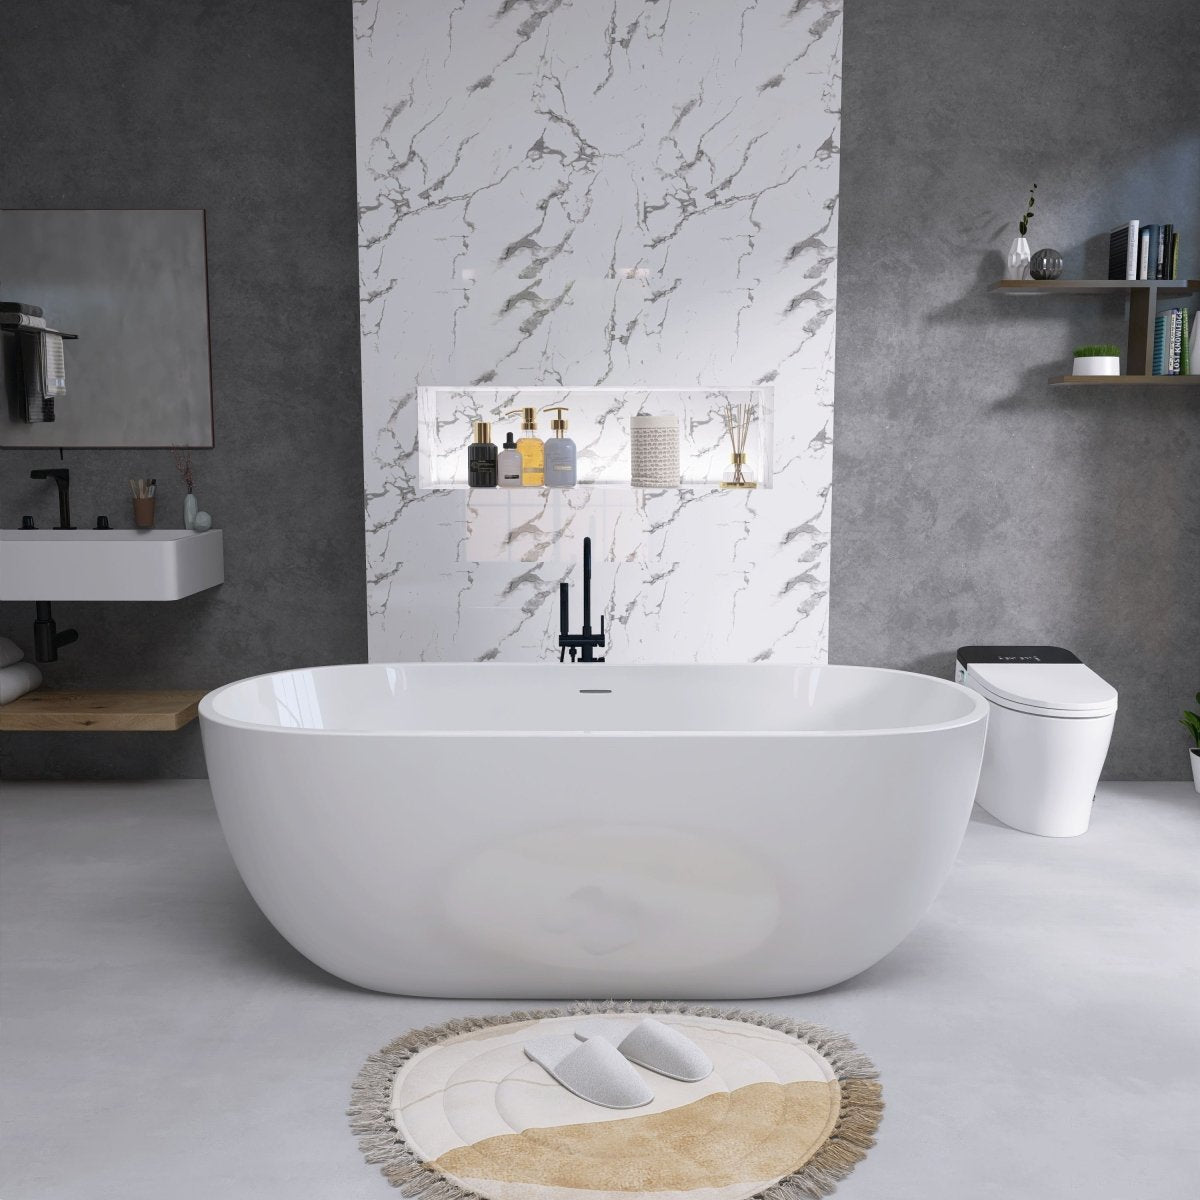 ExBrite Bathtub 55" Acrylic Free Standing Tub Classic Oval Soaking Tub Adjustable Freestanding Chrome Pop-up Drain Anti-clogging Gloss White